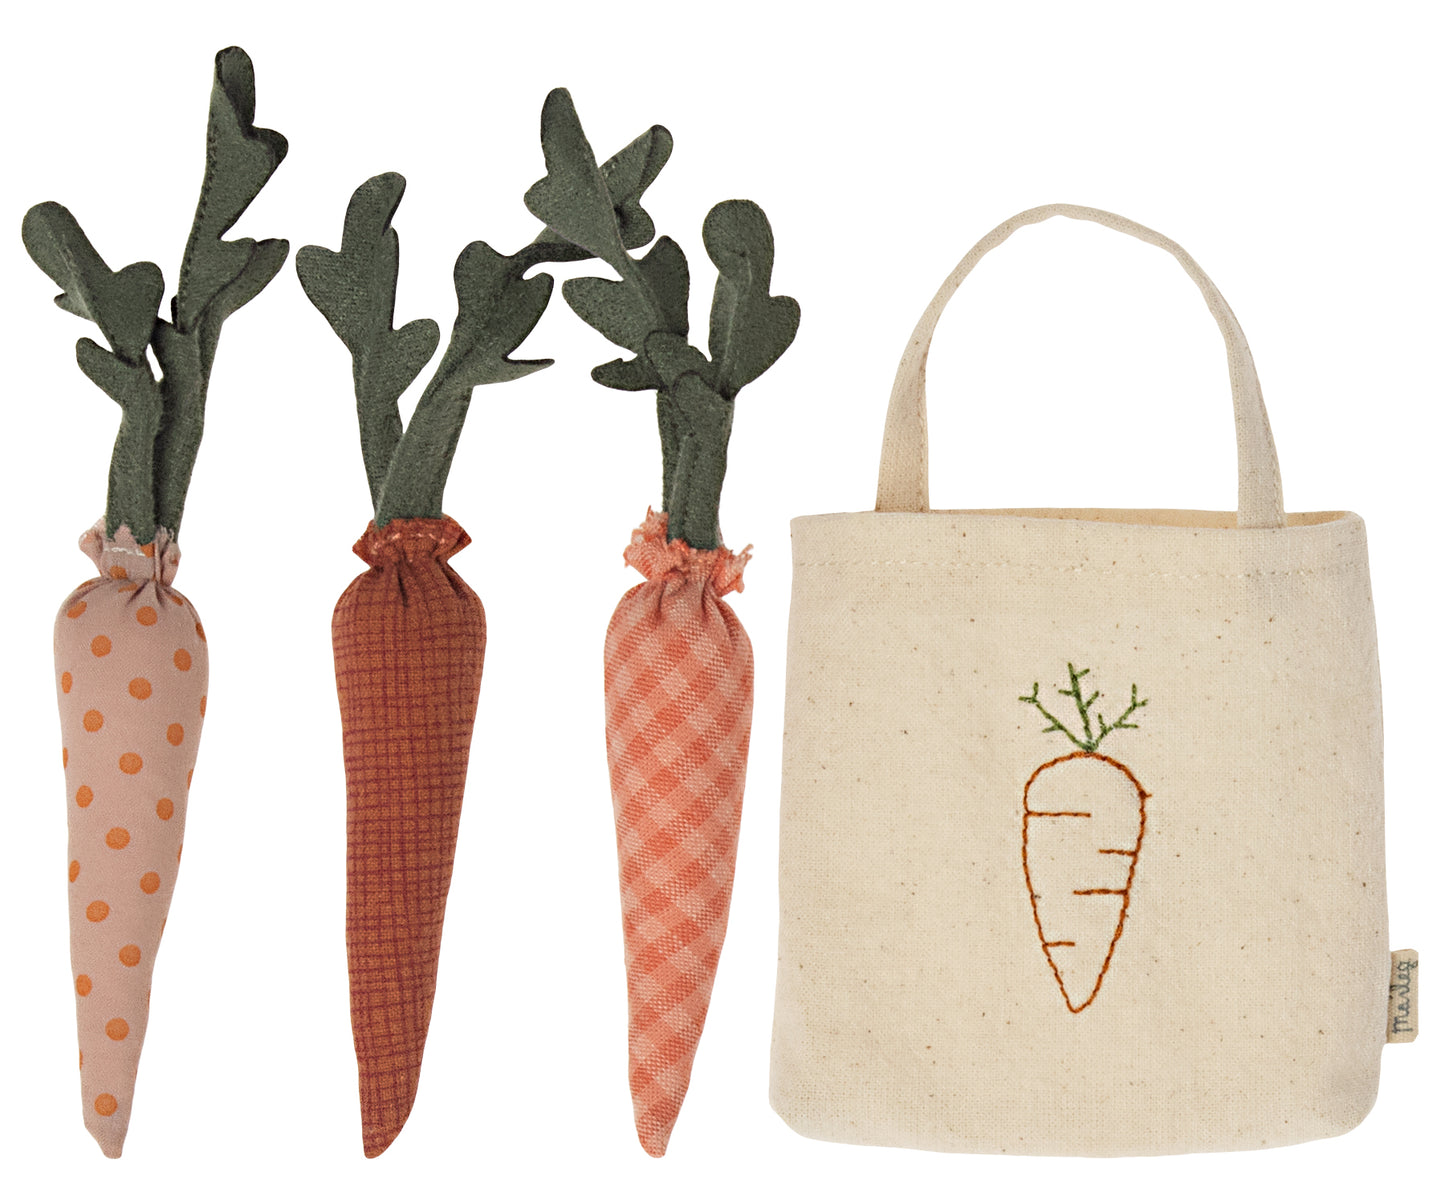 Maileg Carrots In Shopping Bag